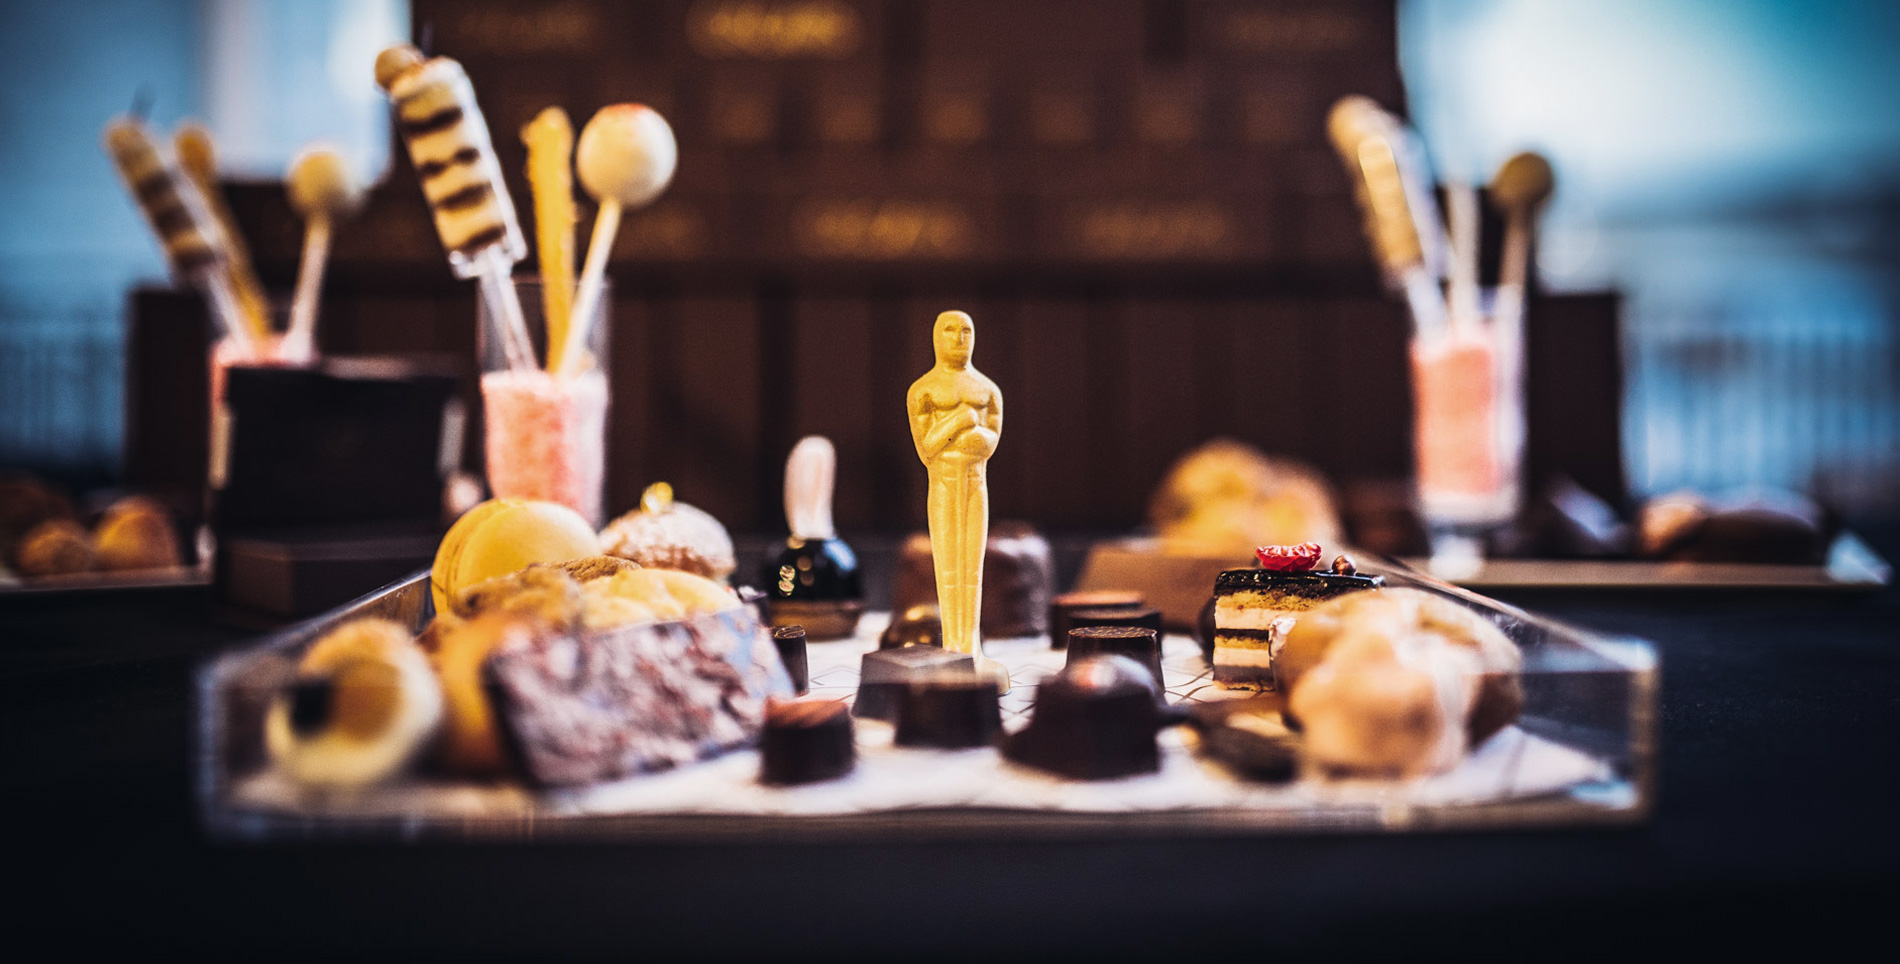 Backstage at the Oscars Governor’s Ball